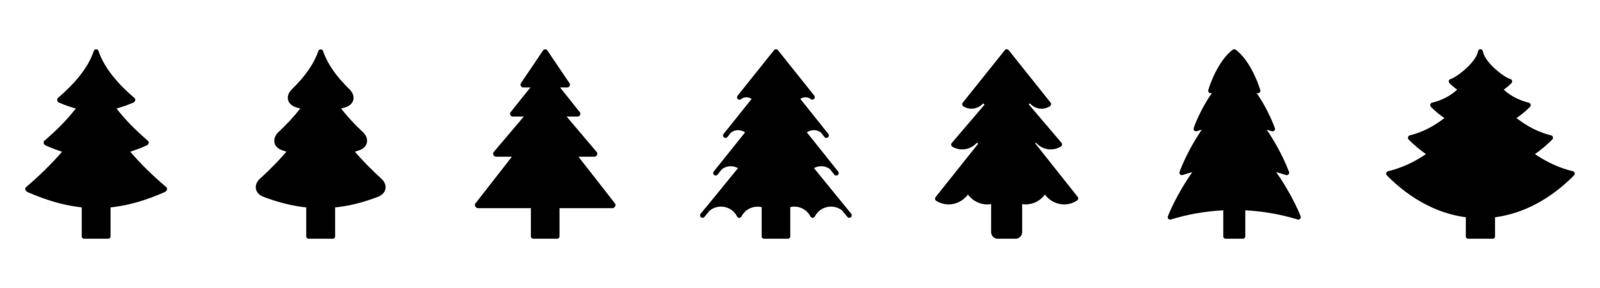 Christmas tree icon. Set of black tree icons. Vector illustration by Chekman